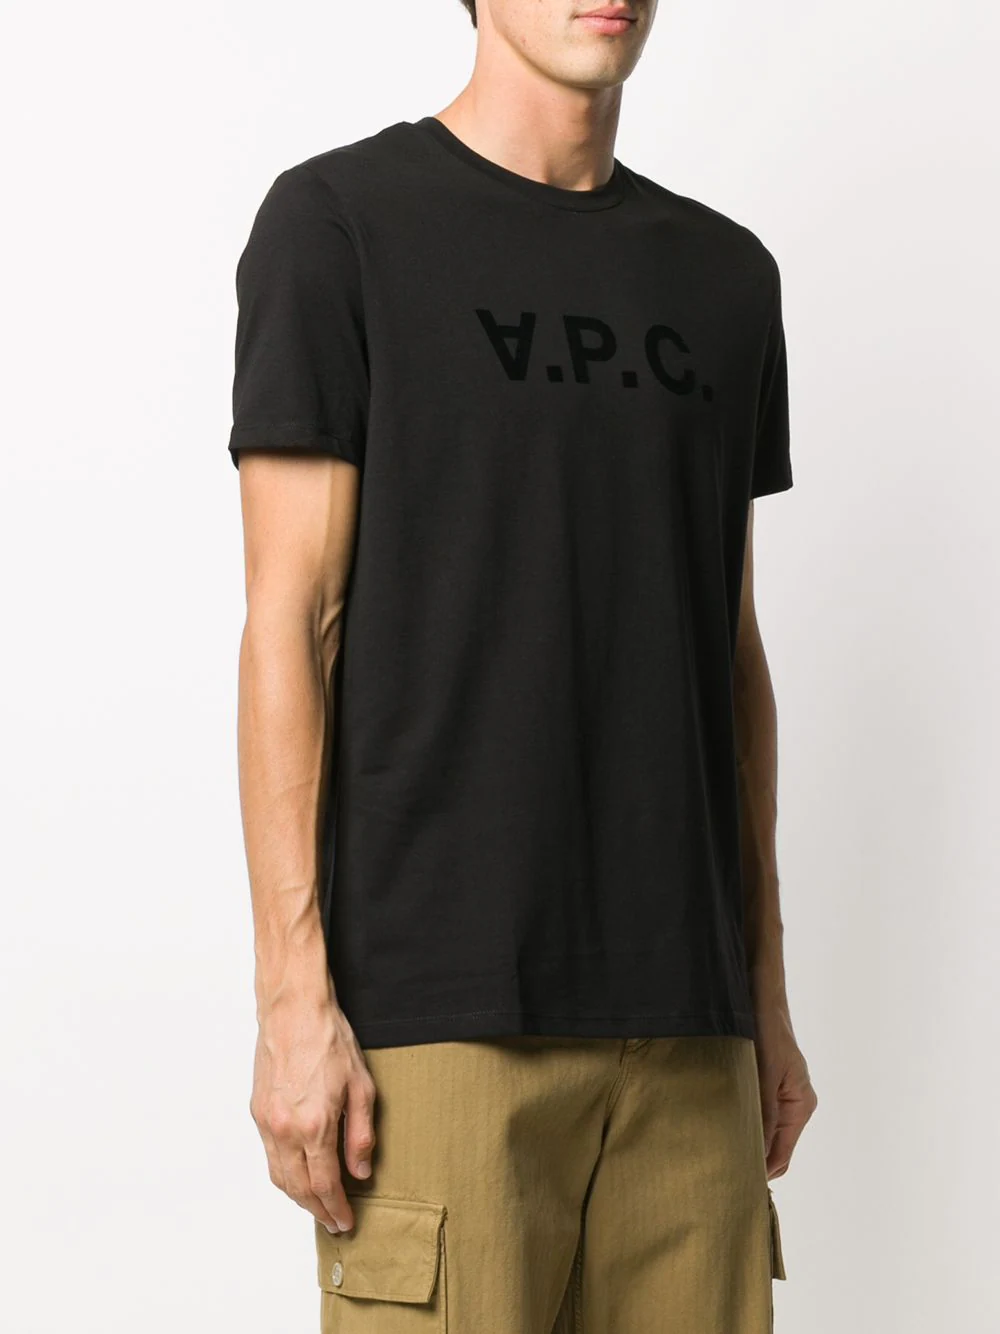 Shop Apc T-shirt V.p.c. In Black